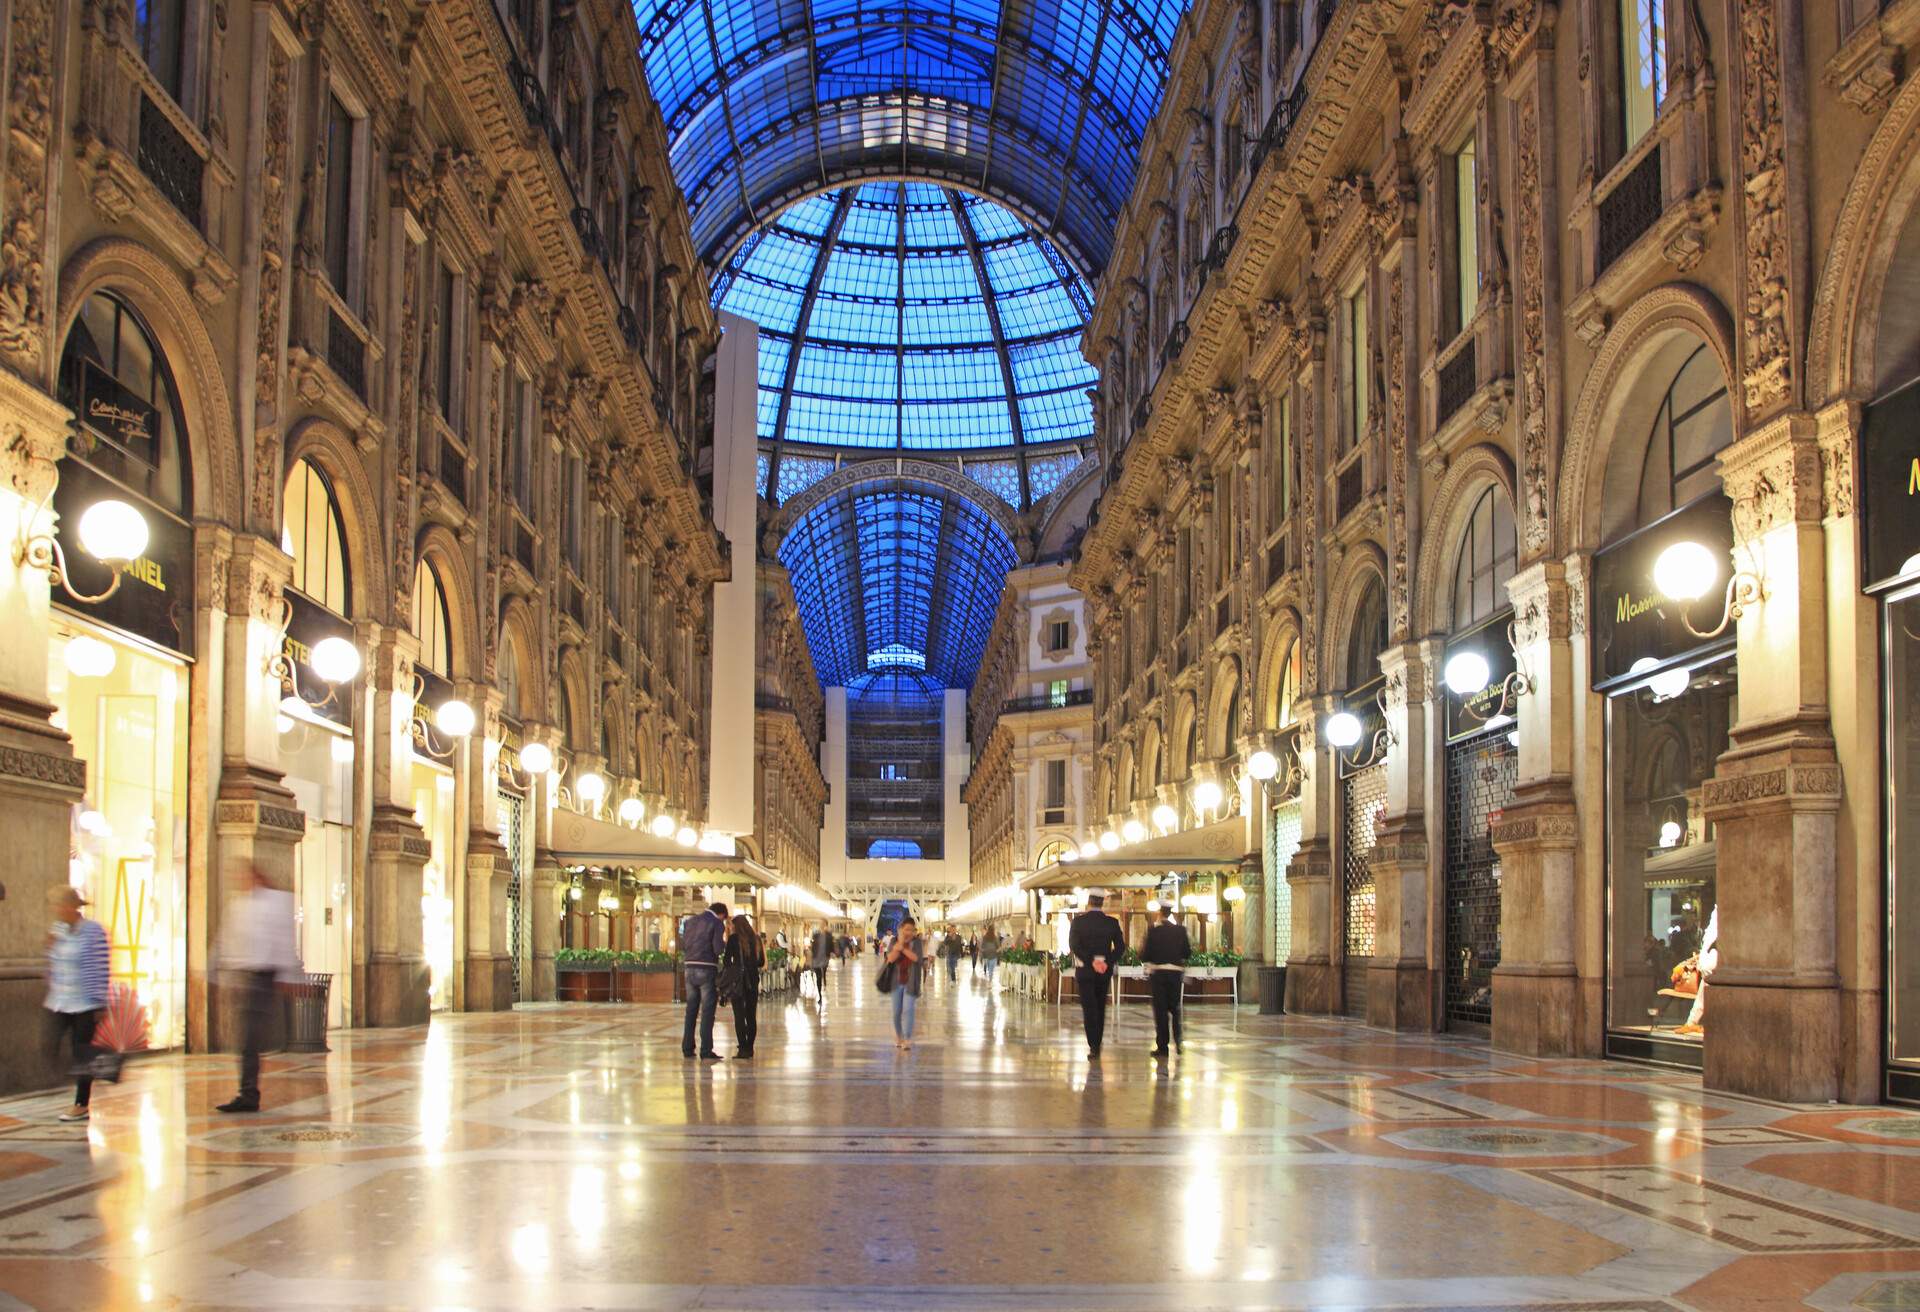 Galleria Vittorio Emanuele Ii, Milan: How To Reach, Best Time & Tips